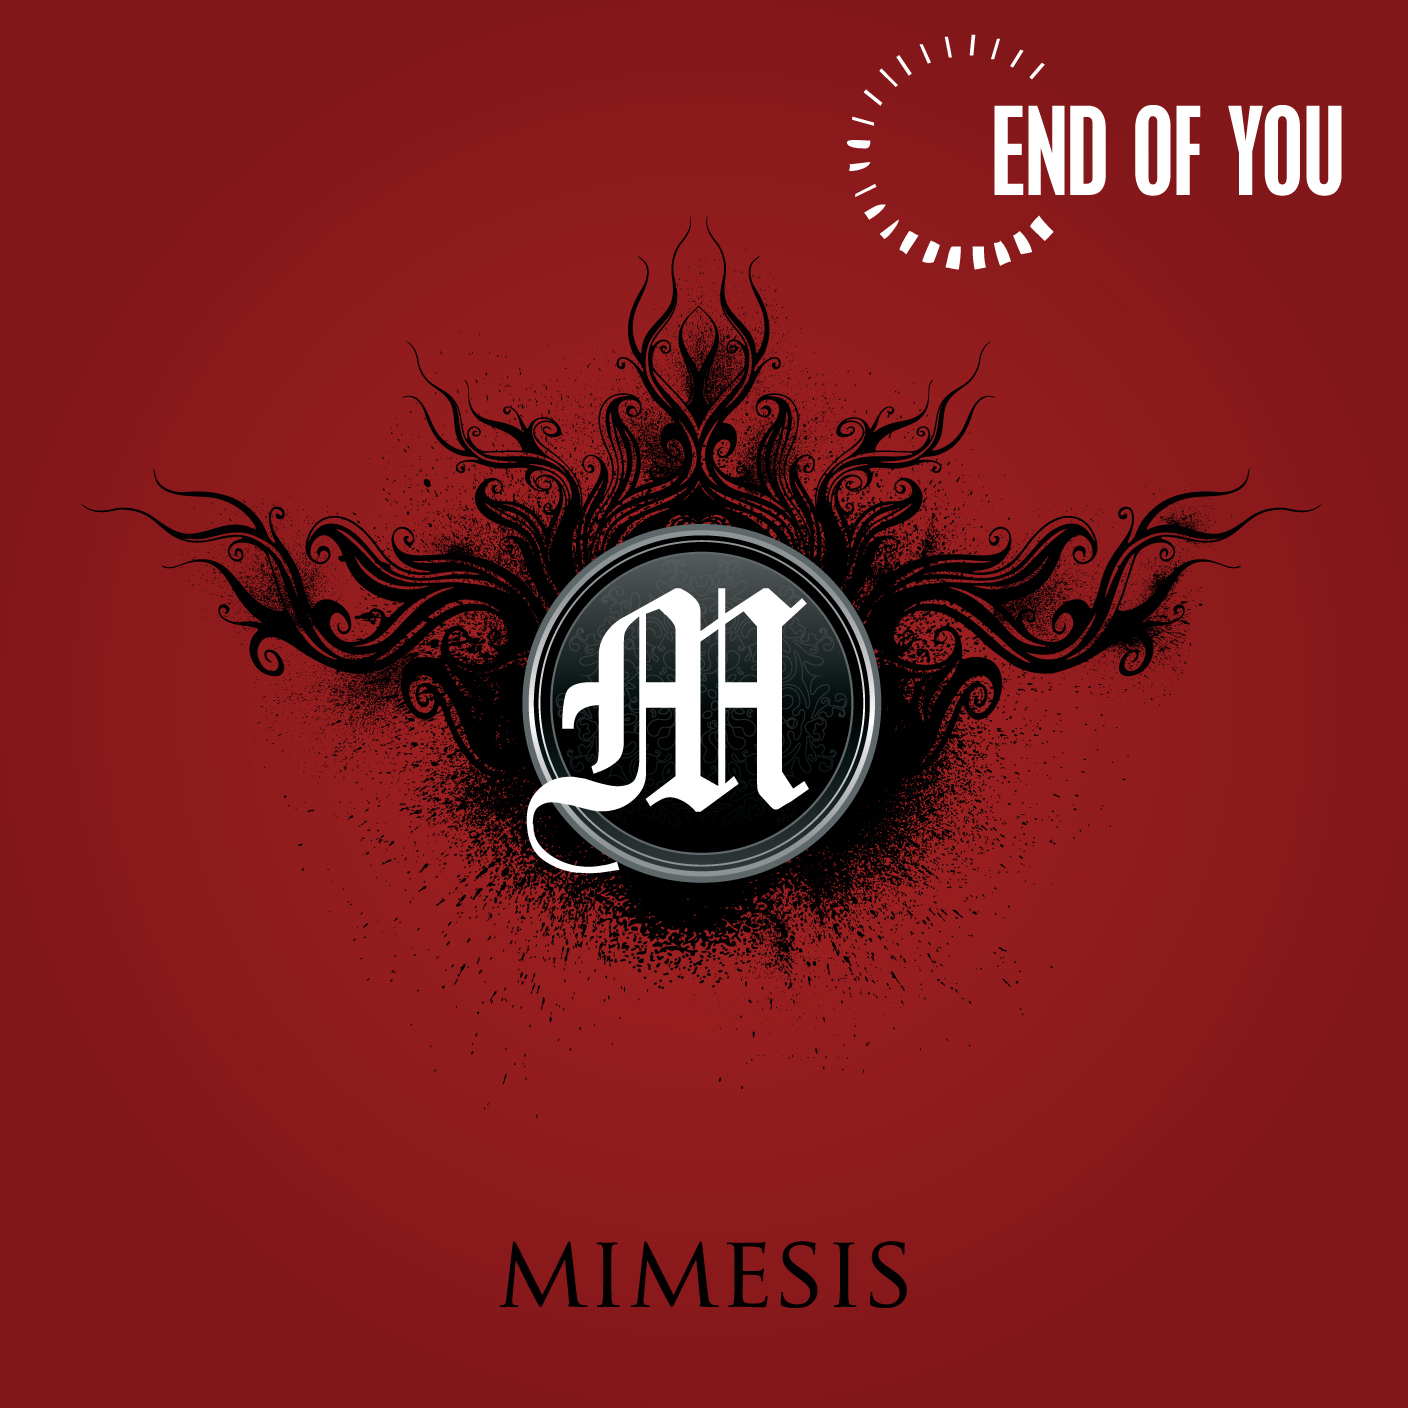 End of You - Mimesis - Album cover